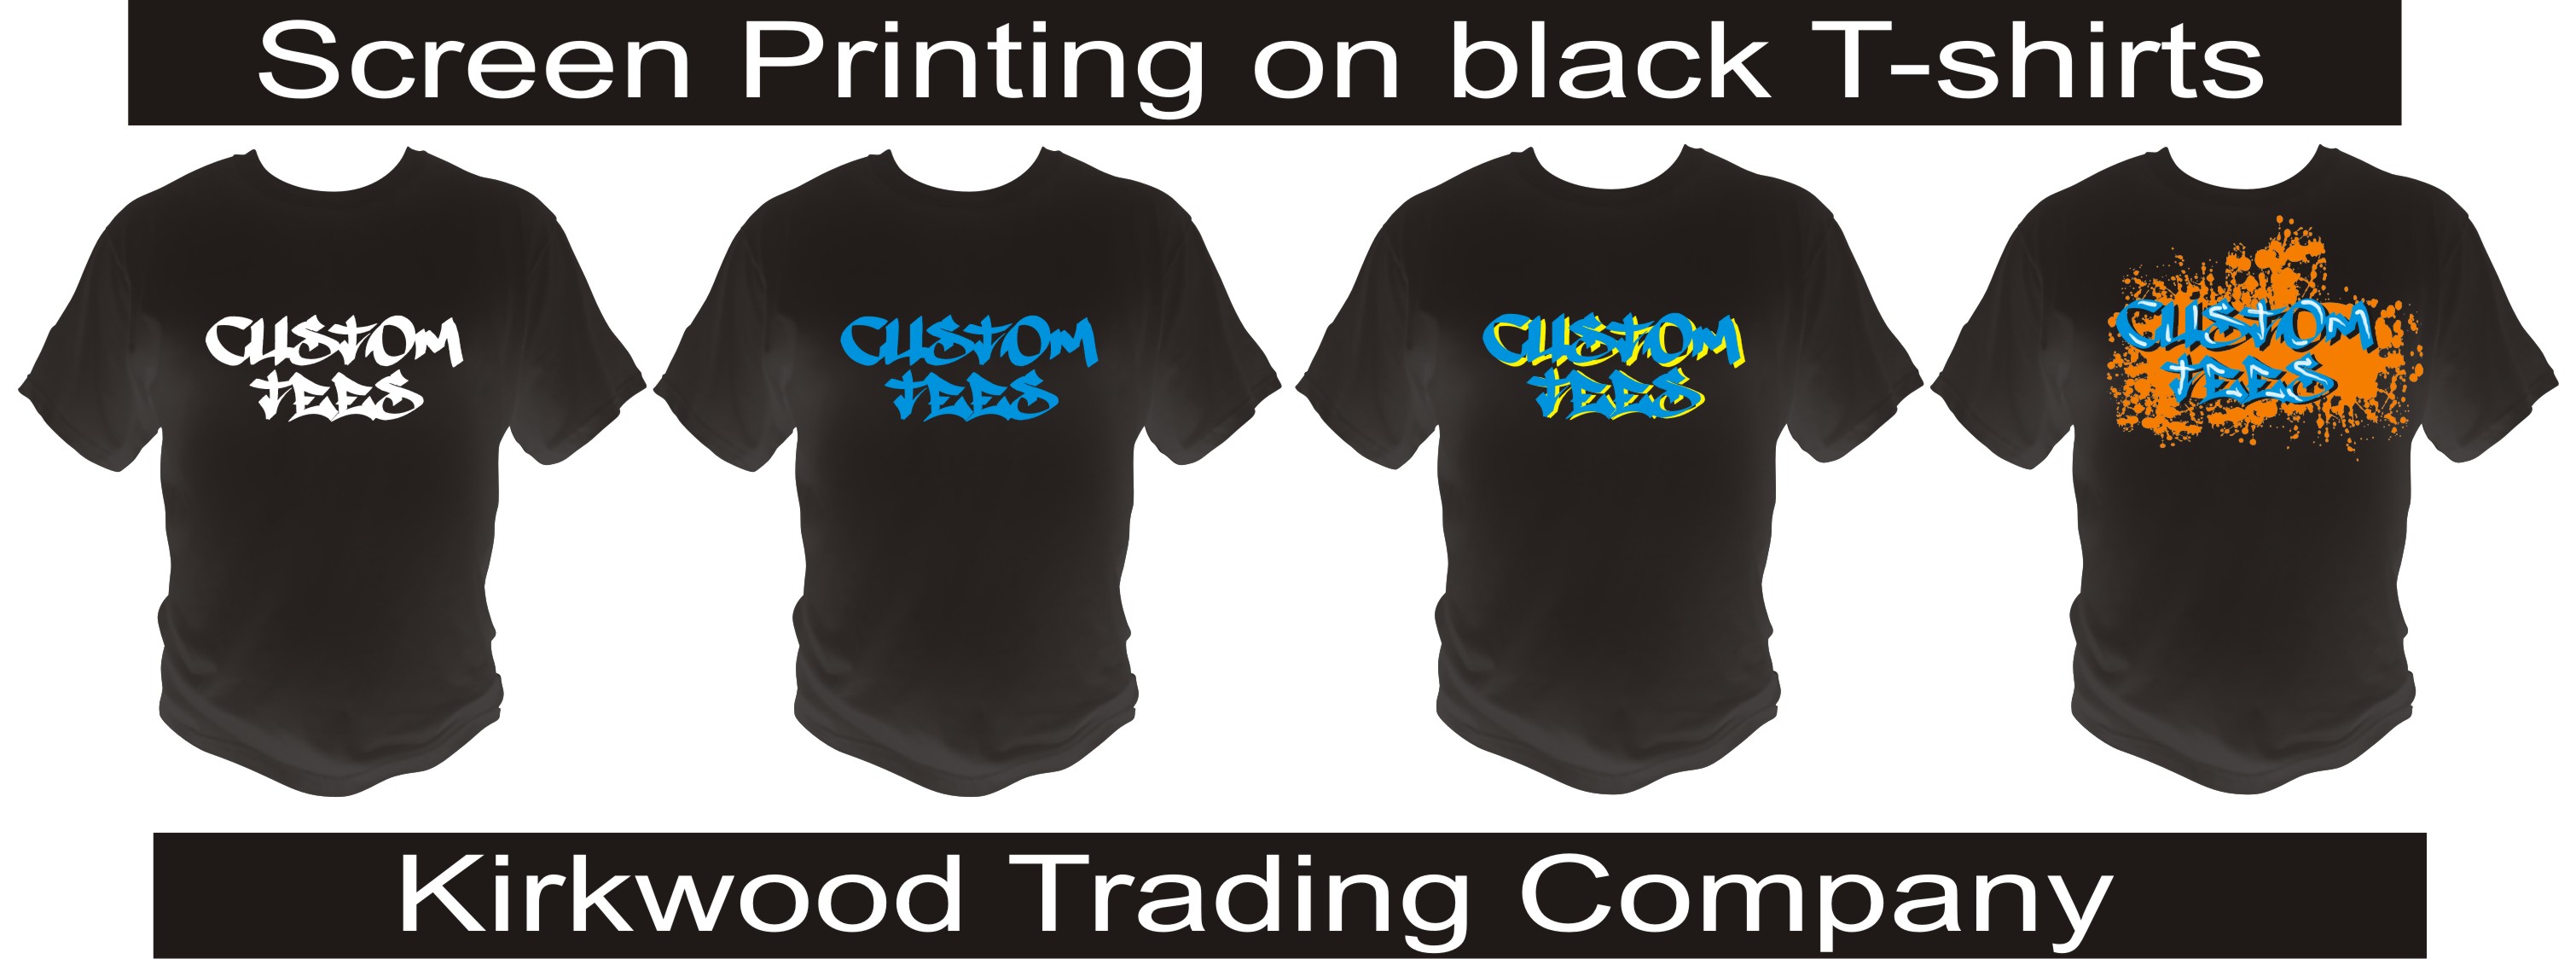 Screen Printing On Black T-shirts - Kirkwood Trading